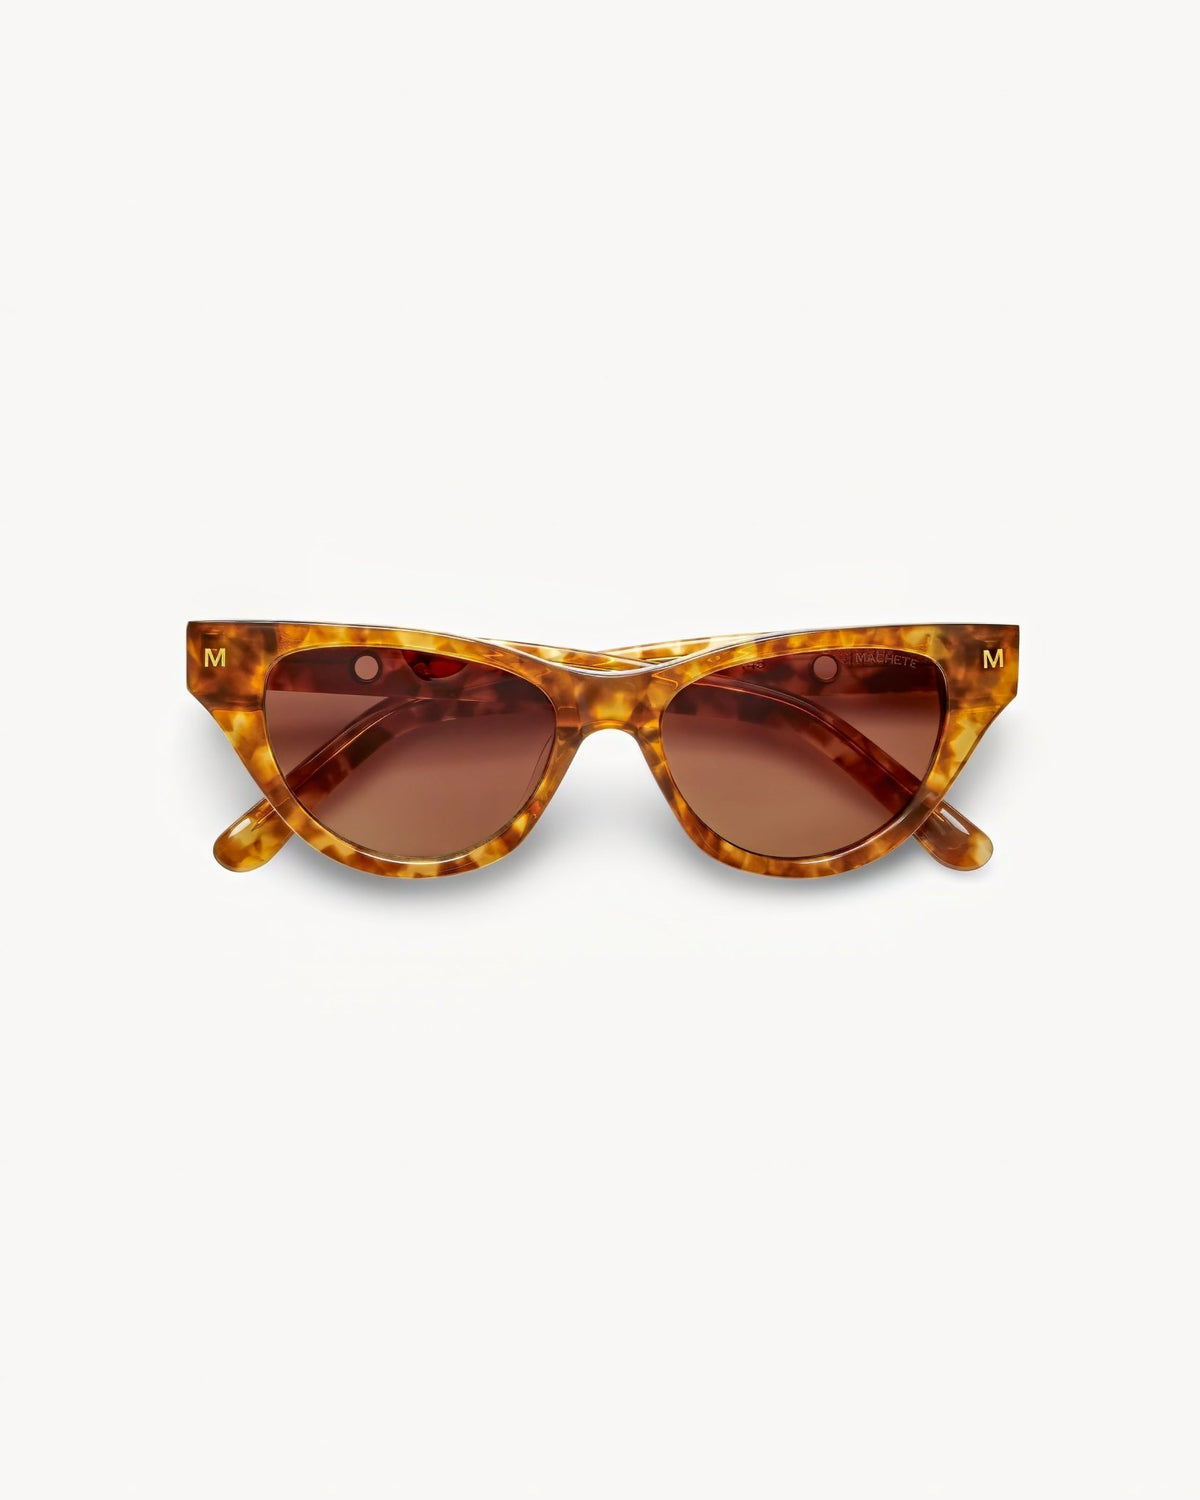 MACHETE Suzy Sunglasses in Mod Tortoise